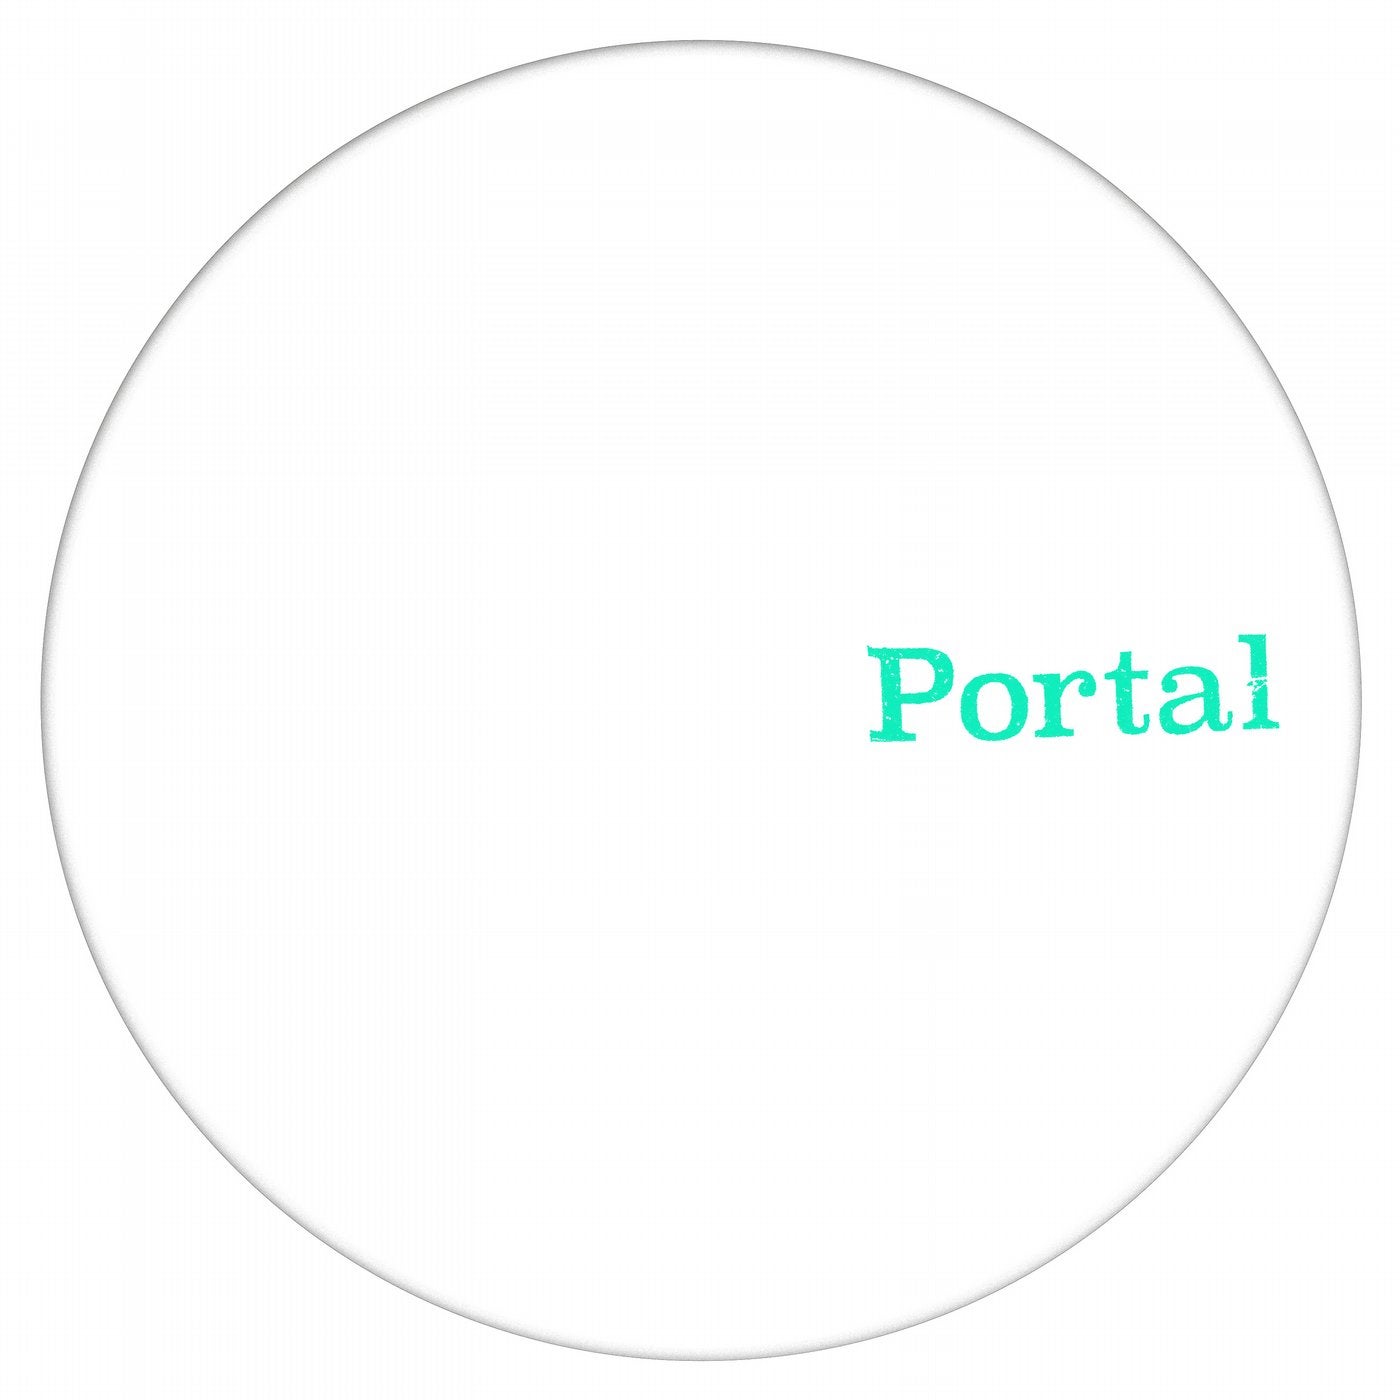 Portal (Part One)